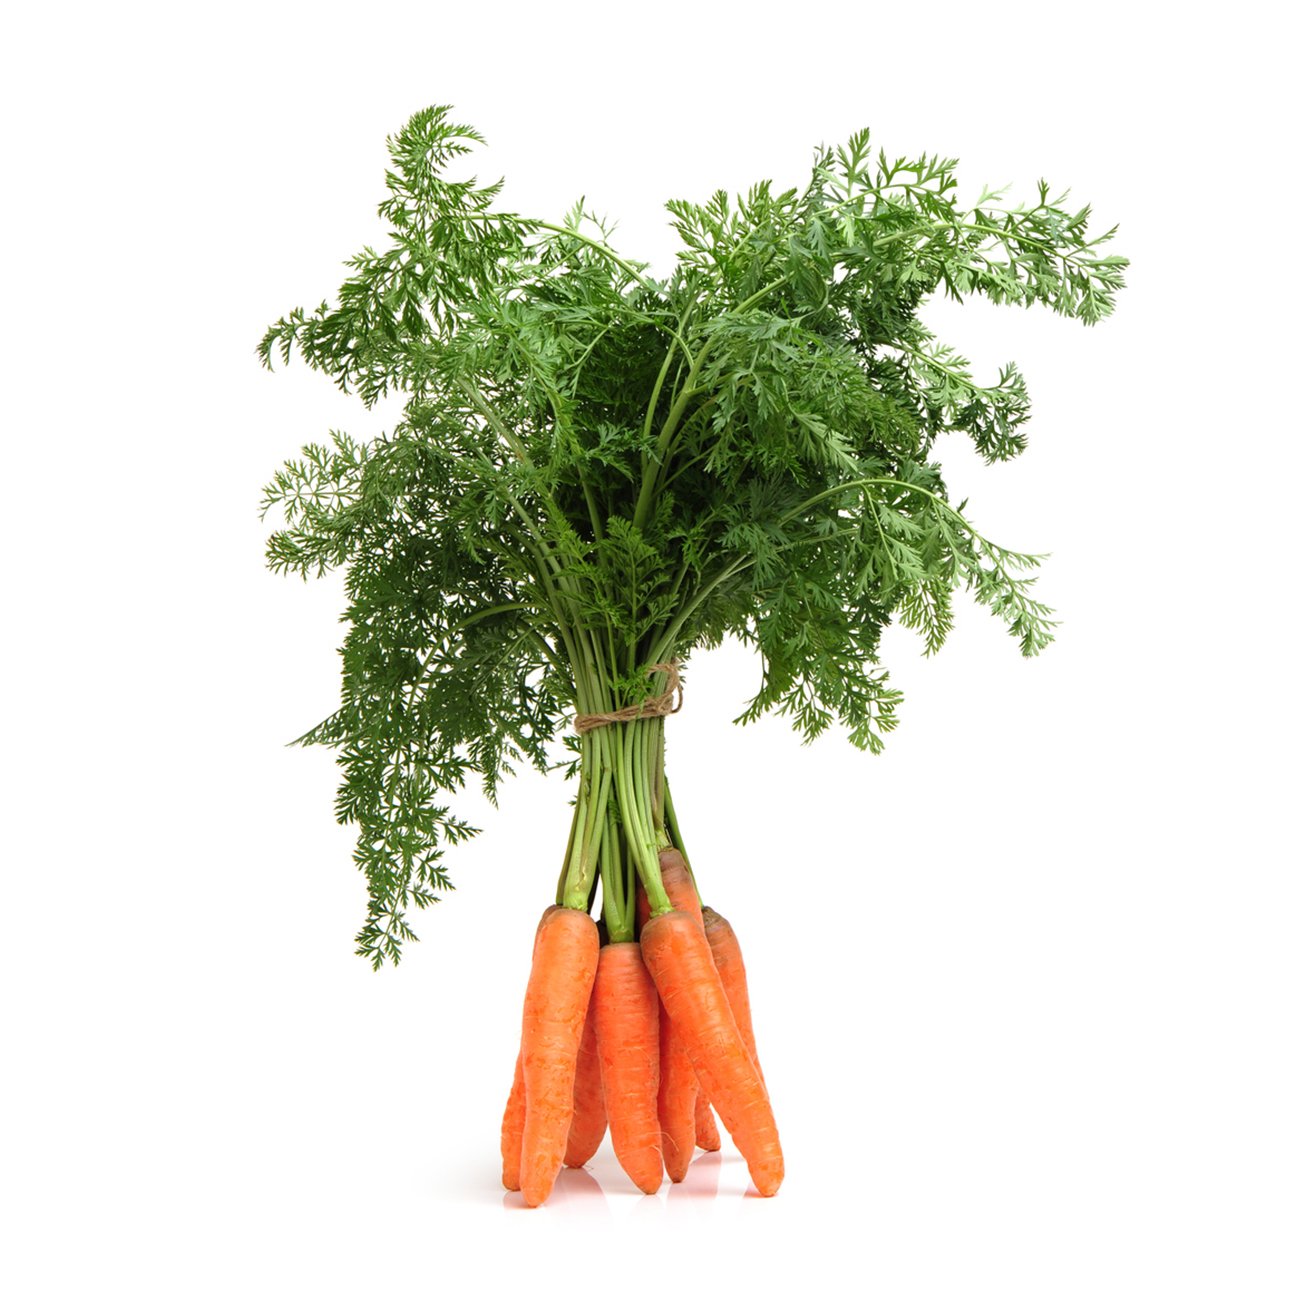 Carrots, baby